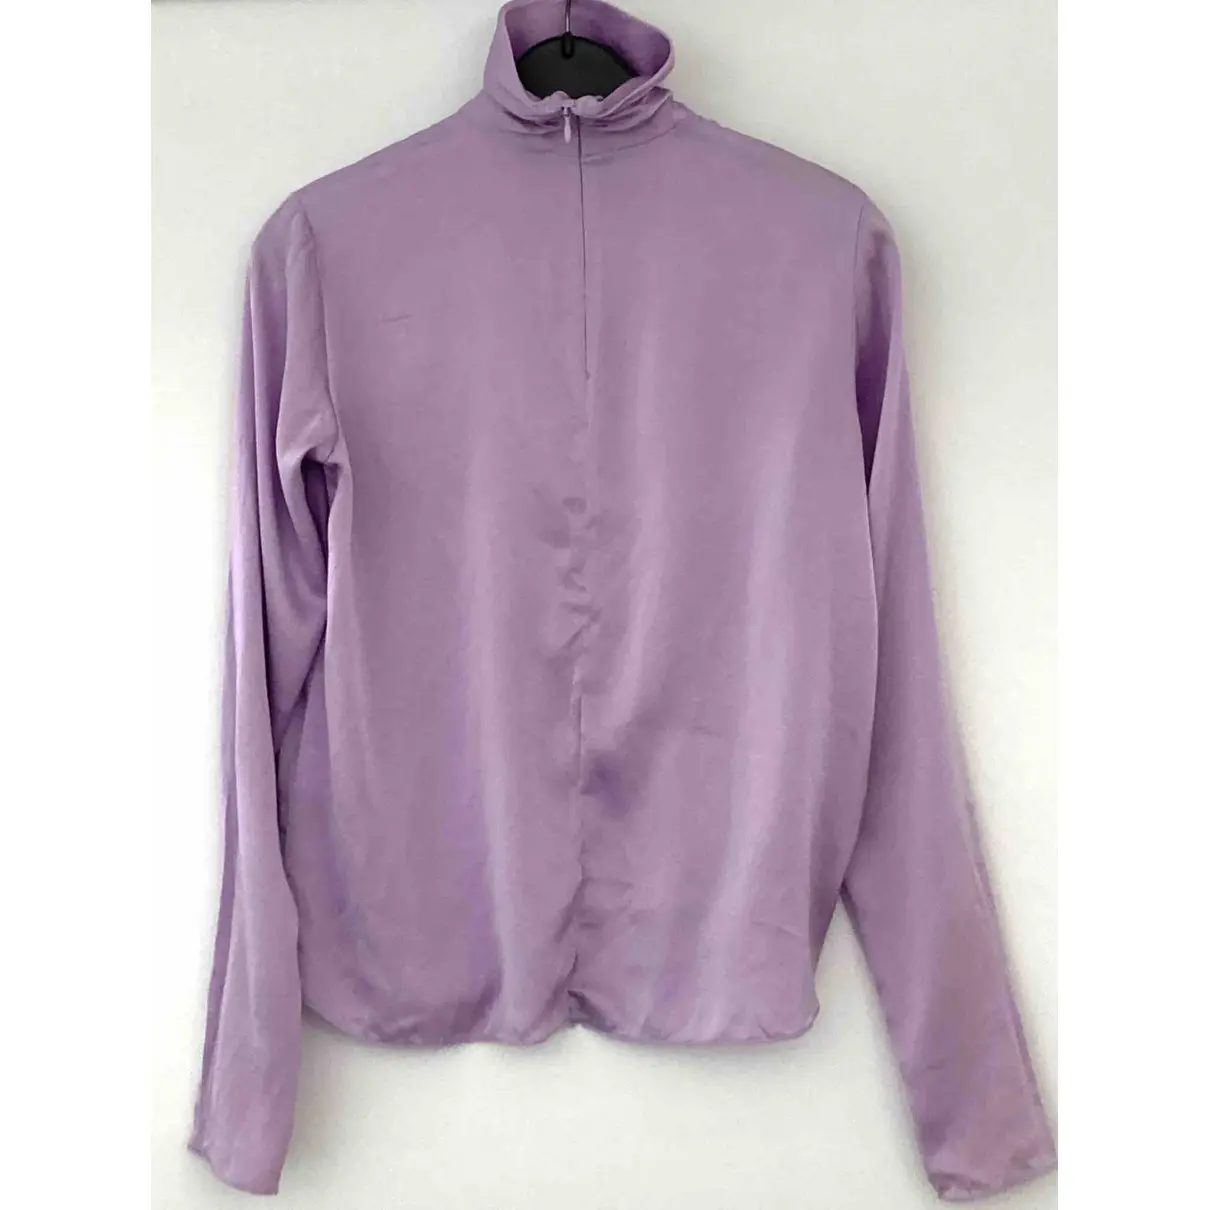 Buy Jucca Silk blouse online